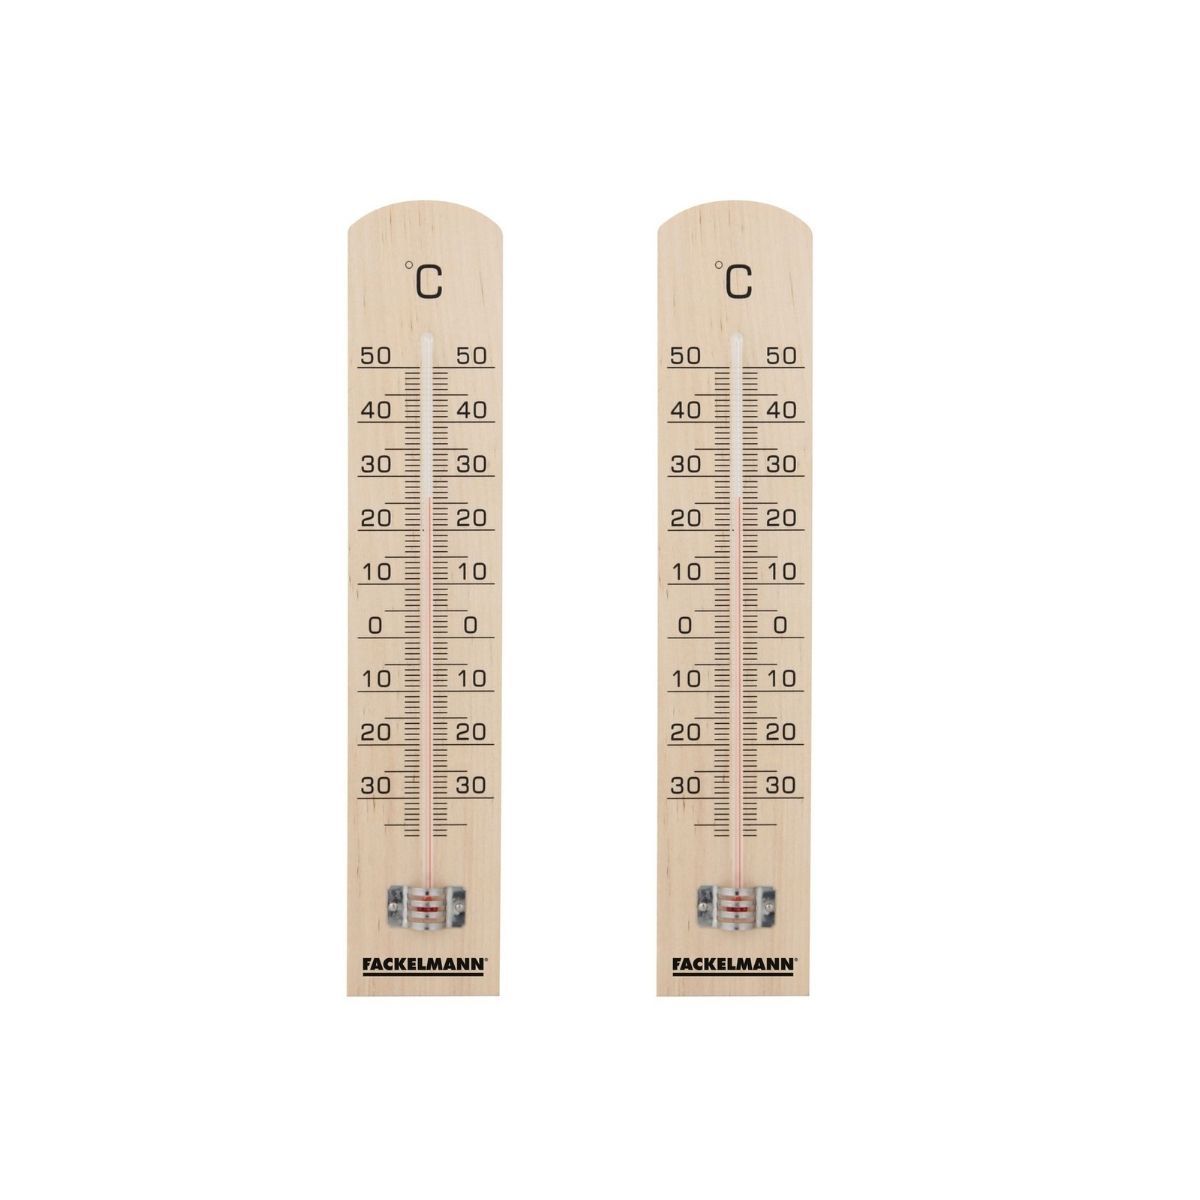 Thermometre bois petit modele personnalisable